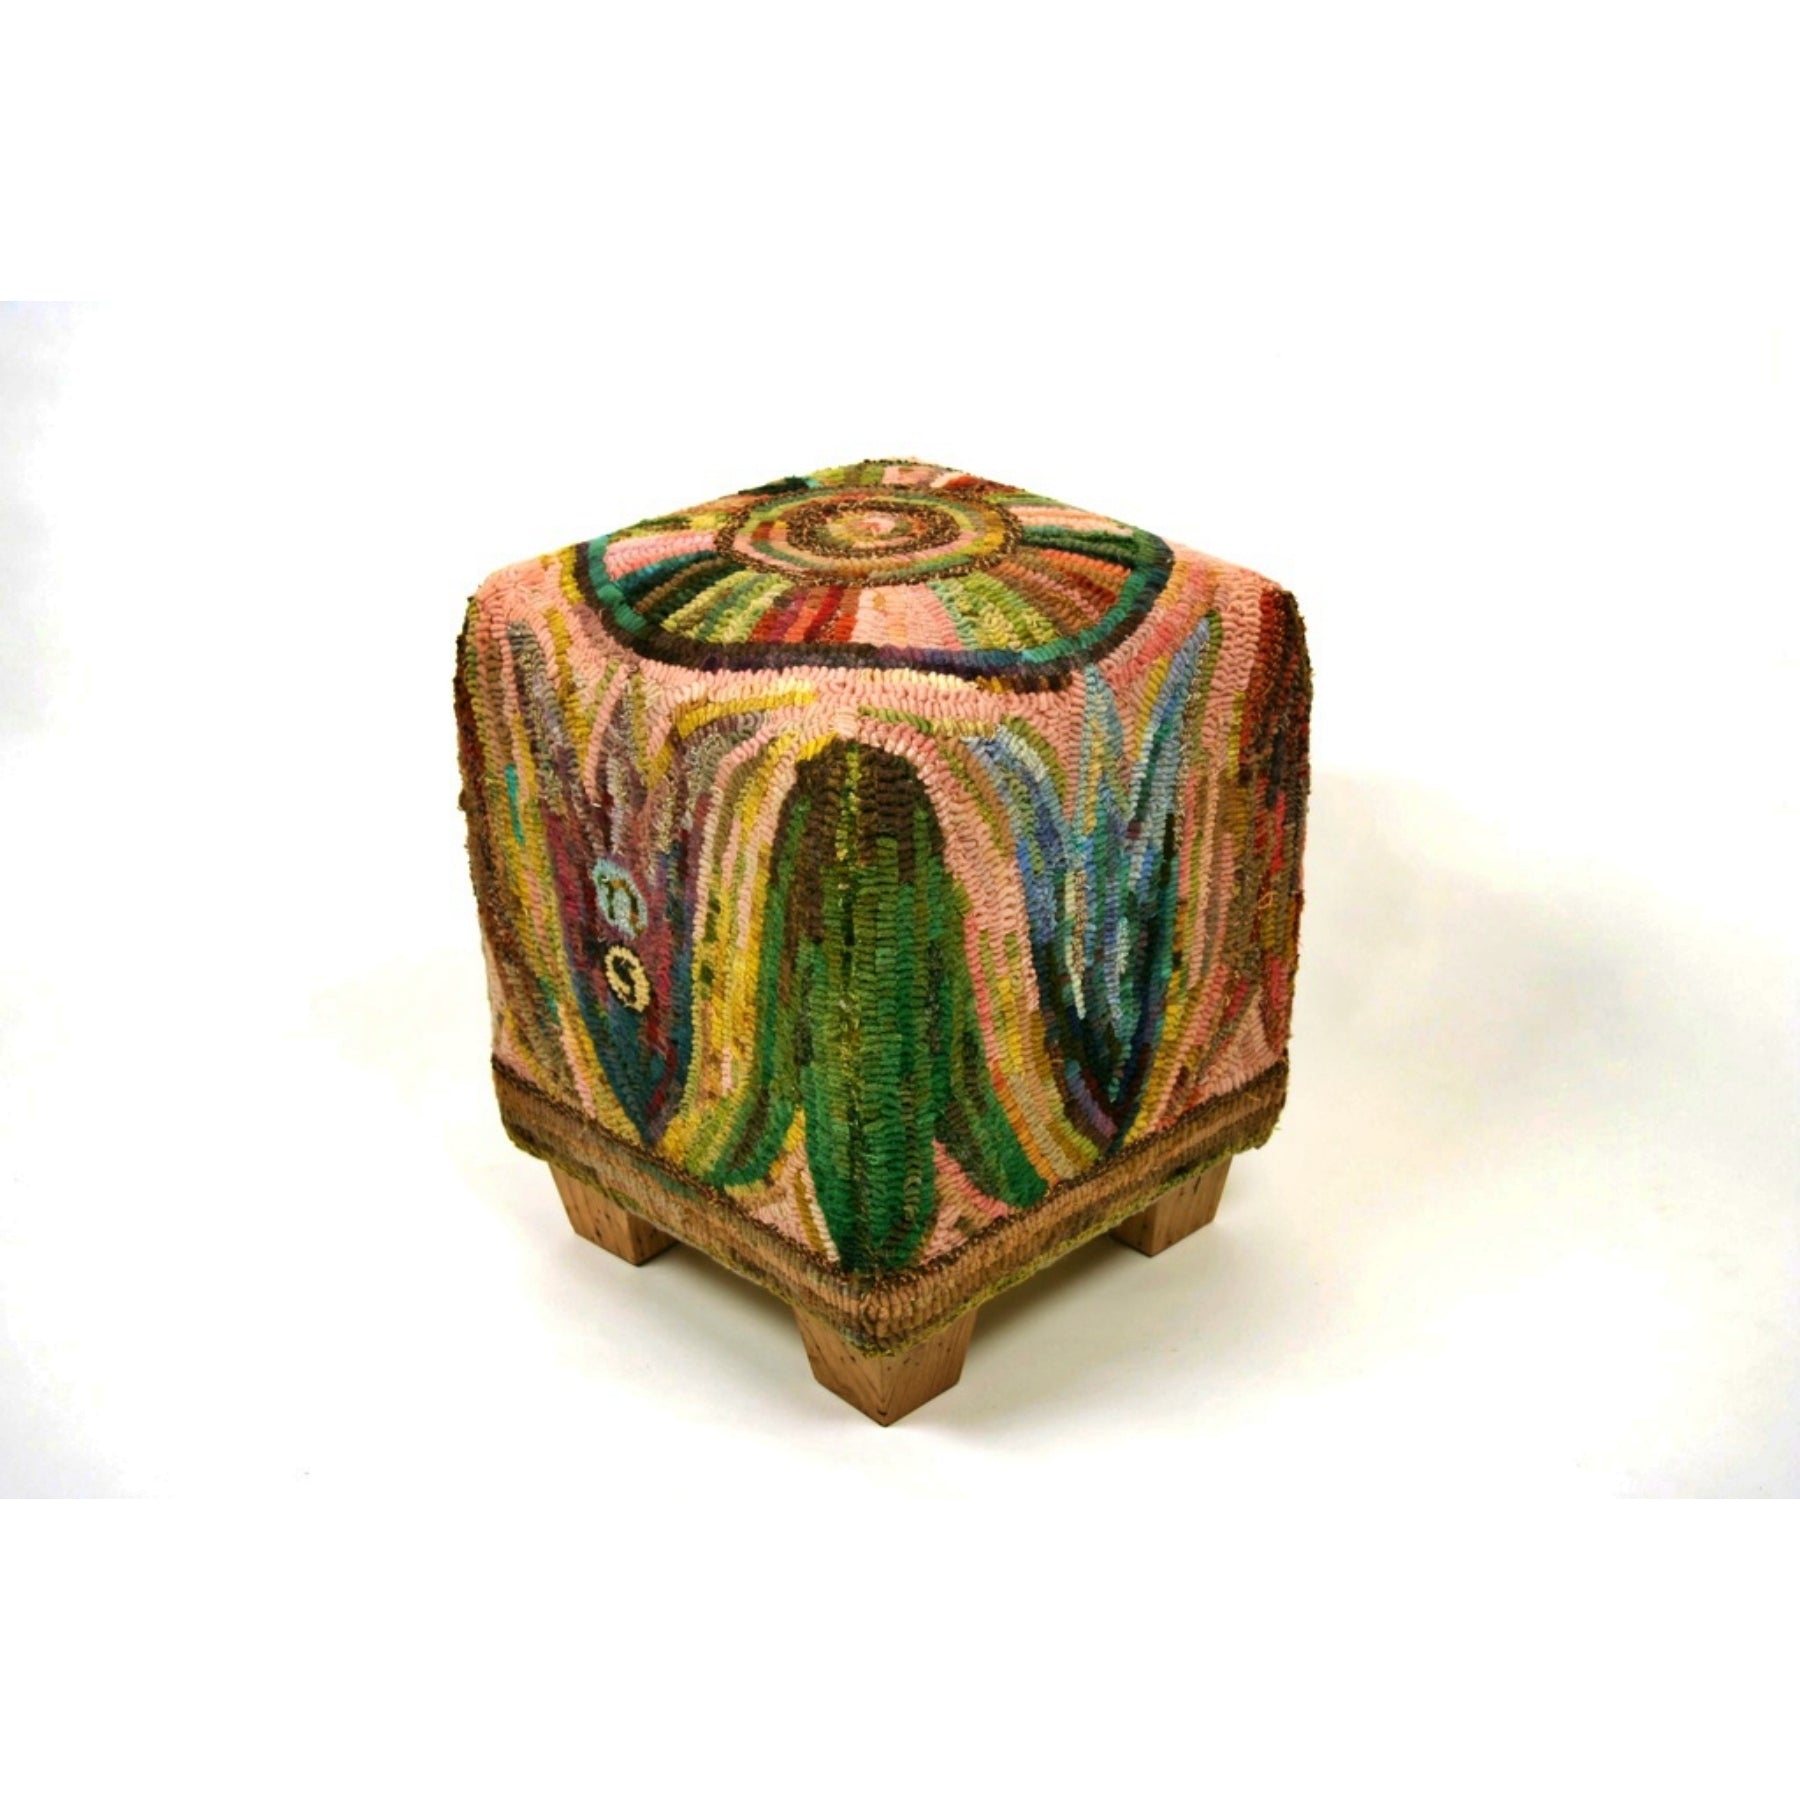 Tulip - Cube Footstool Pattern, rug hooked by Kim Nixon